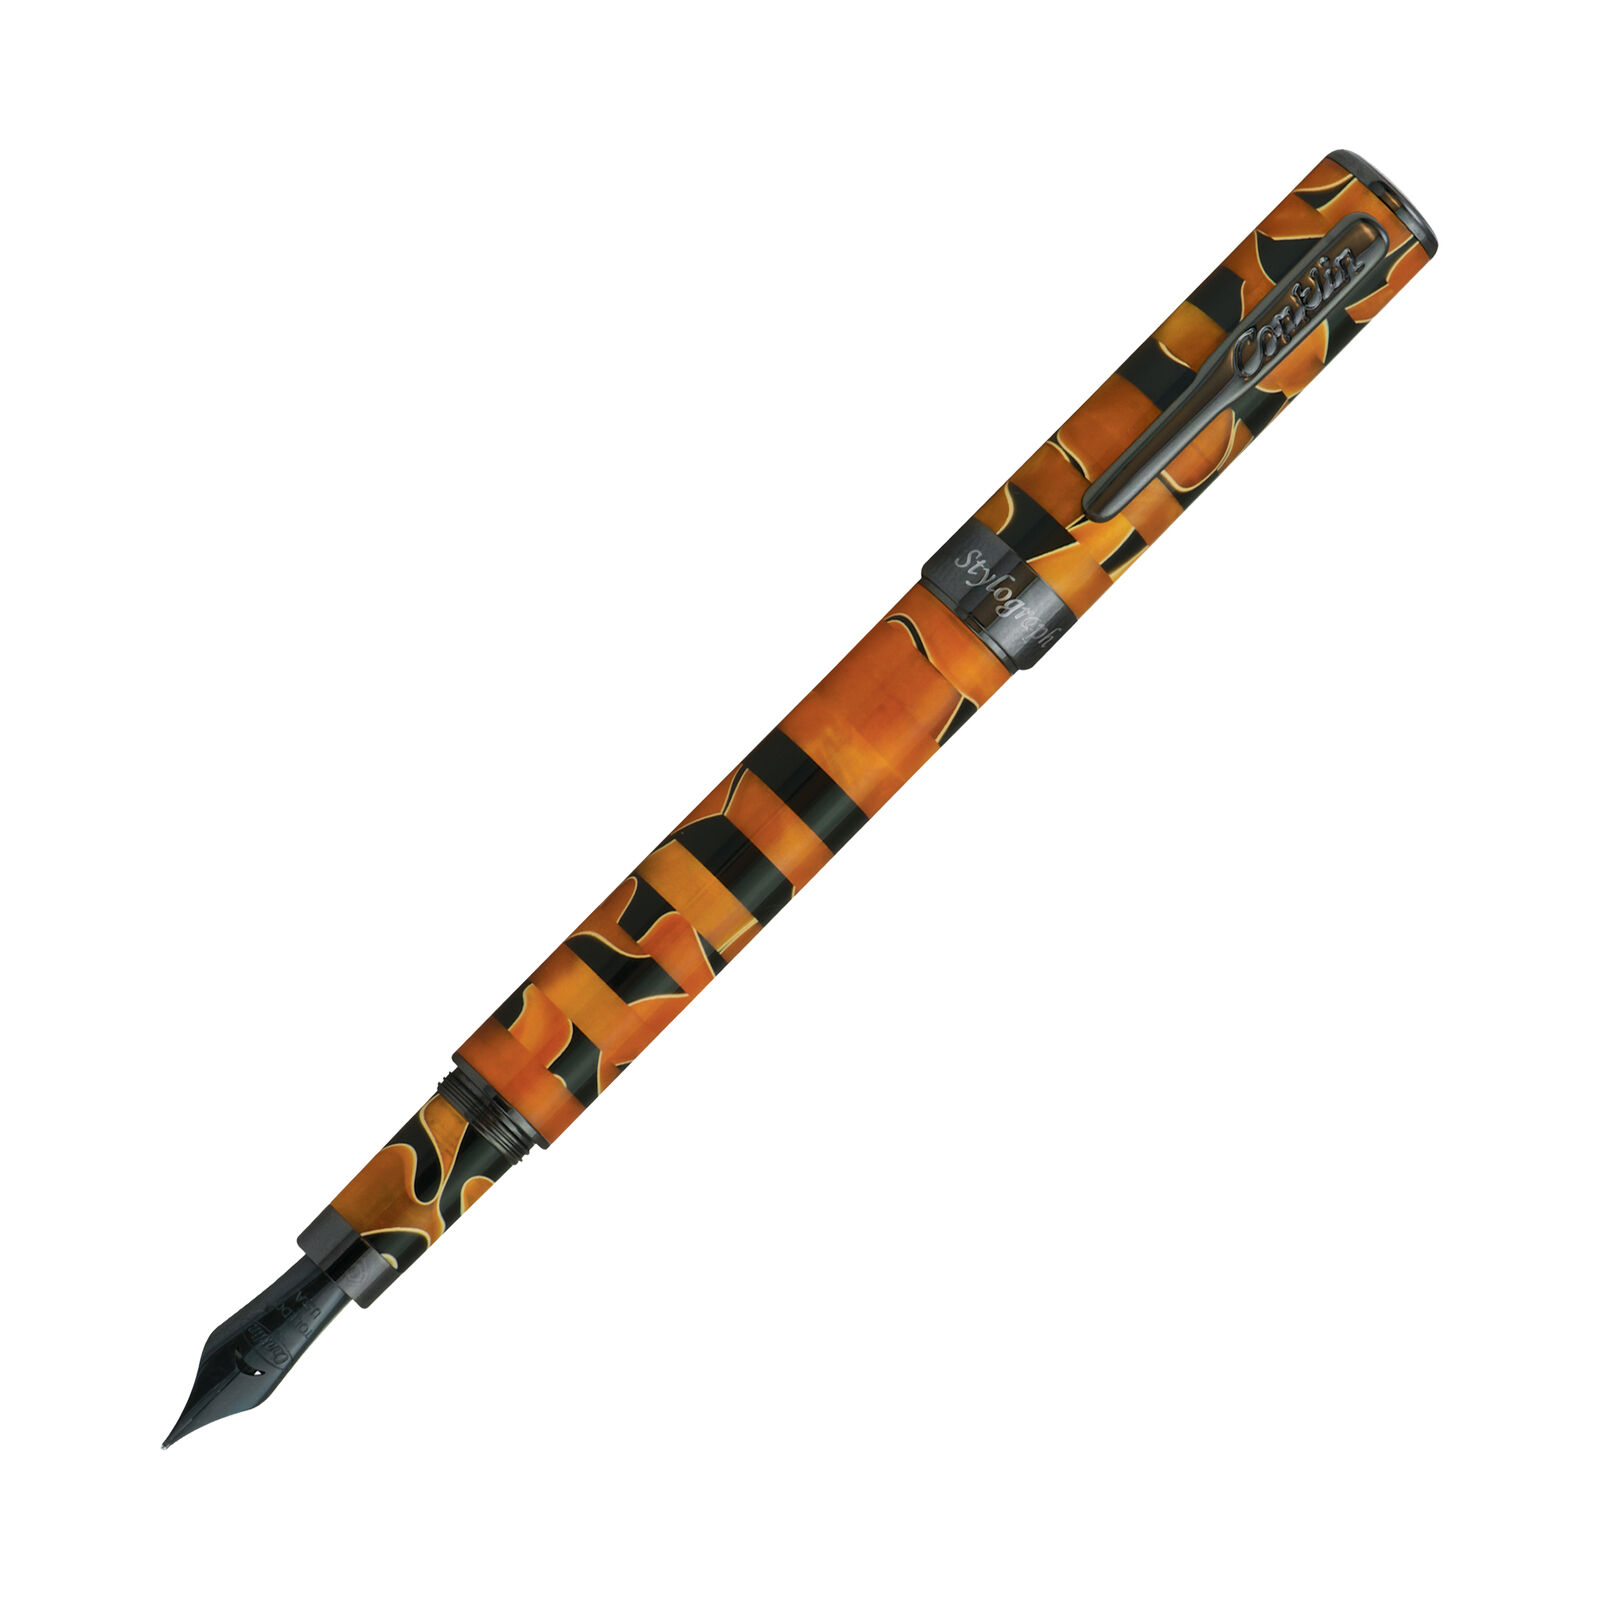 Conklin Stylograph Mosaic Fountain Pen in Orange/Black - Extra Fine Point - NEW